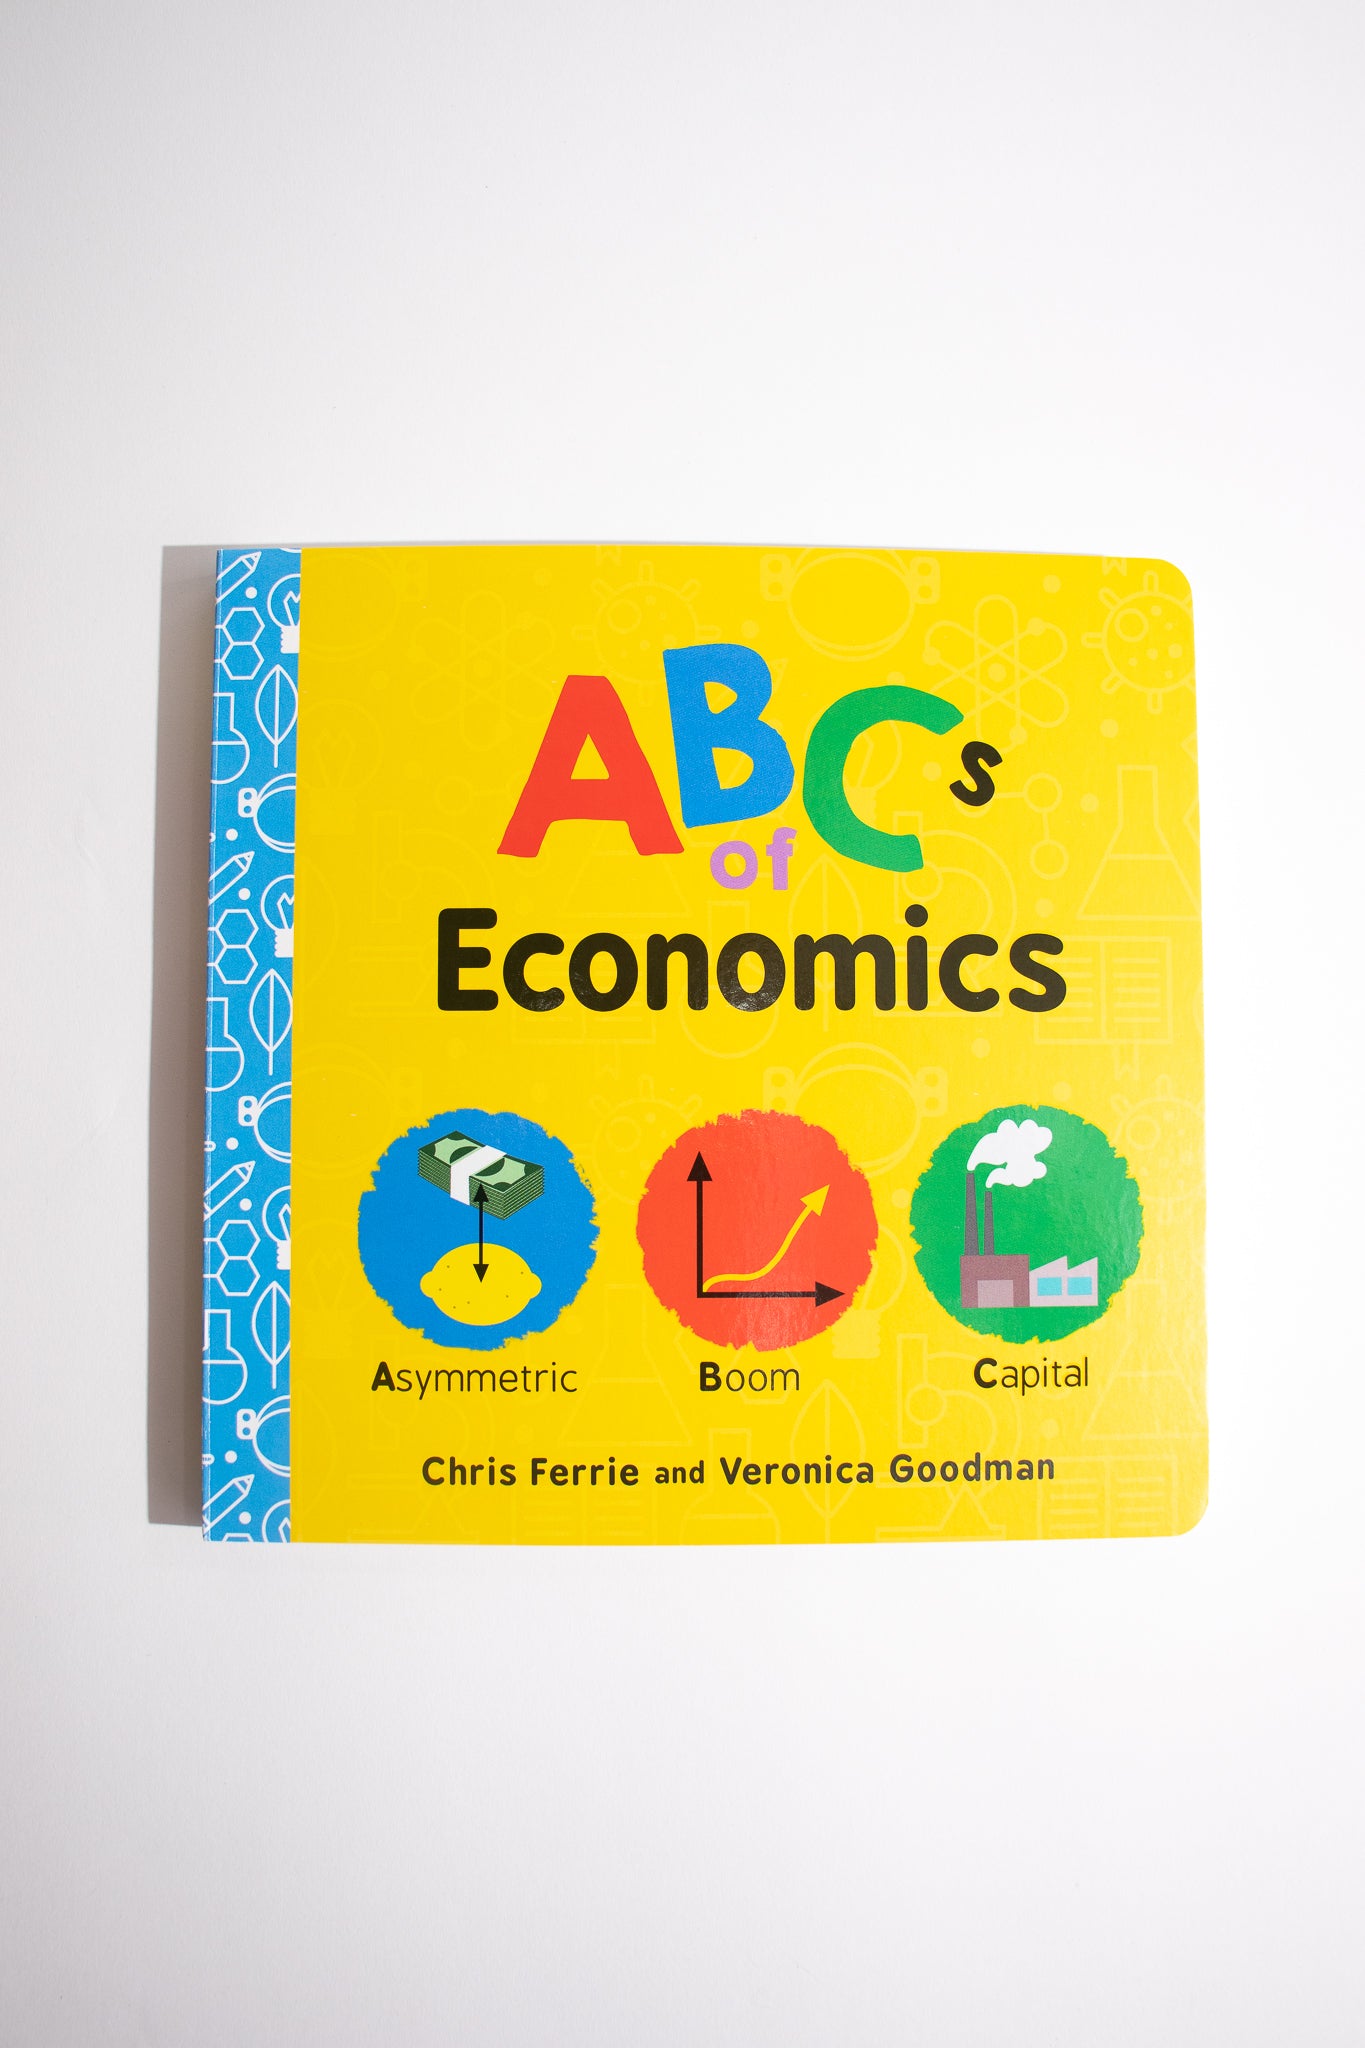 ABCs of Economics - Stemcell Science Shop